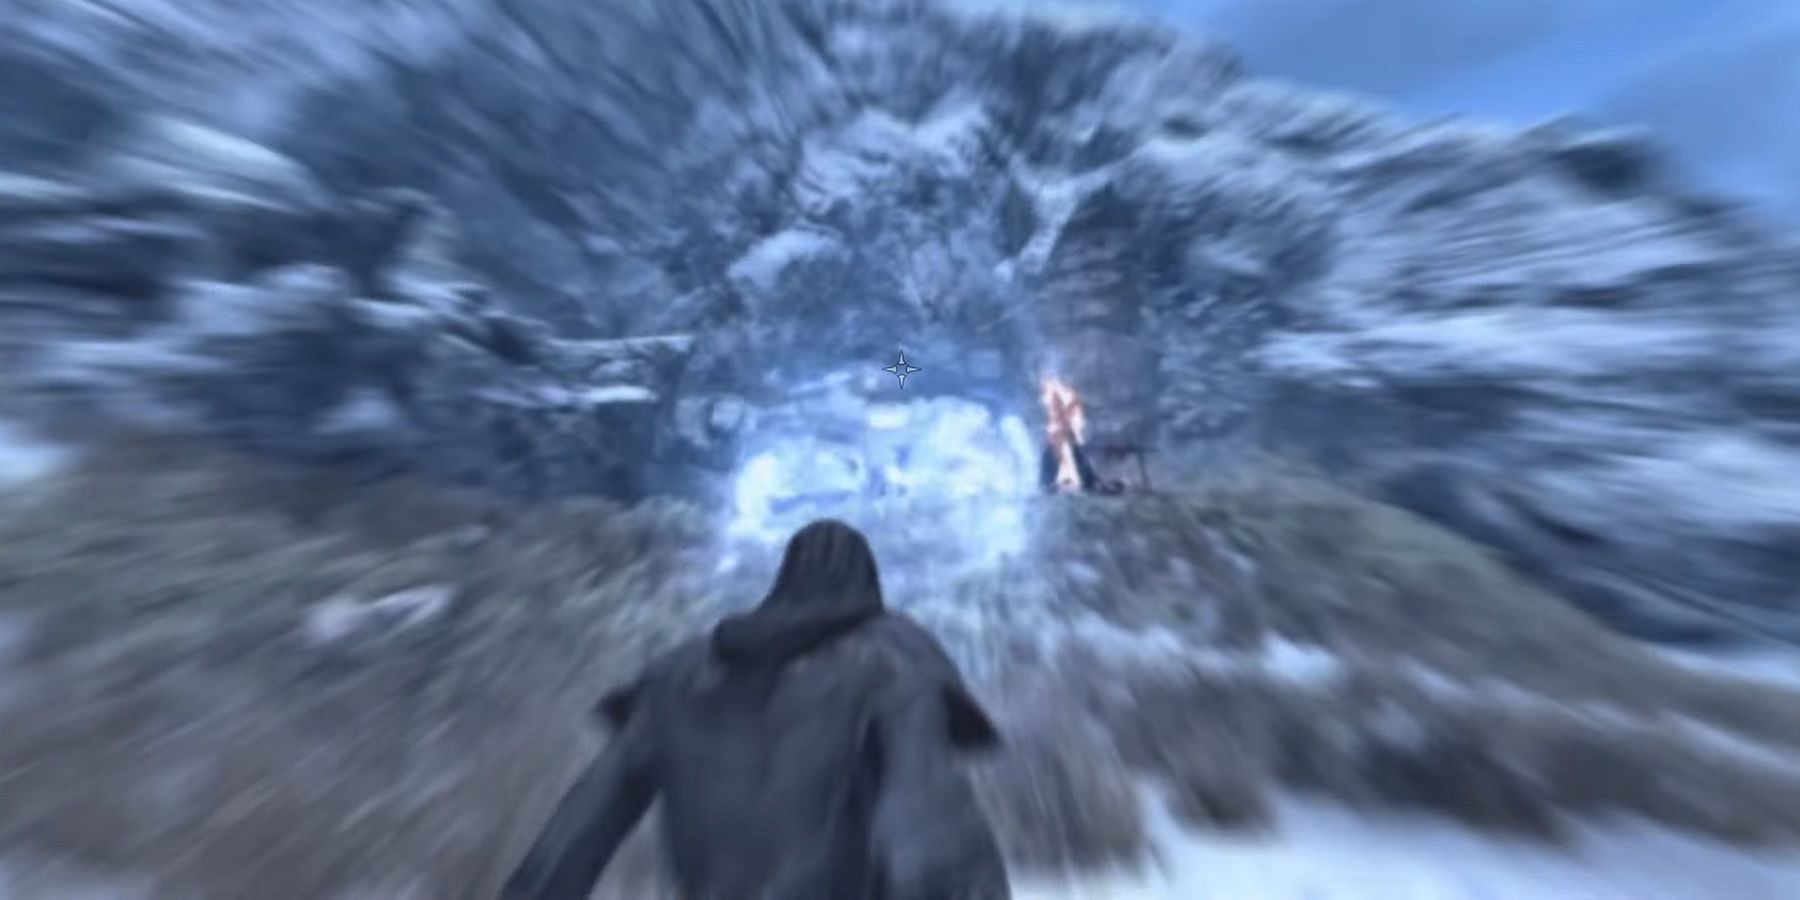 Screenshot from Skyrim showing the player unleashing a powerful Shout.